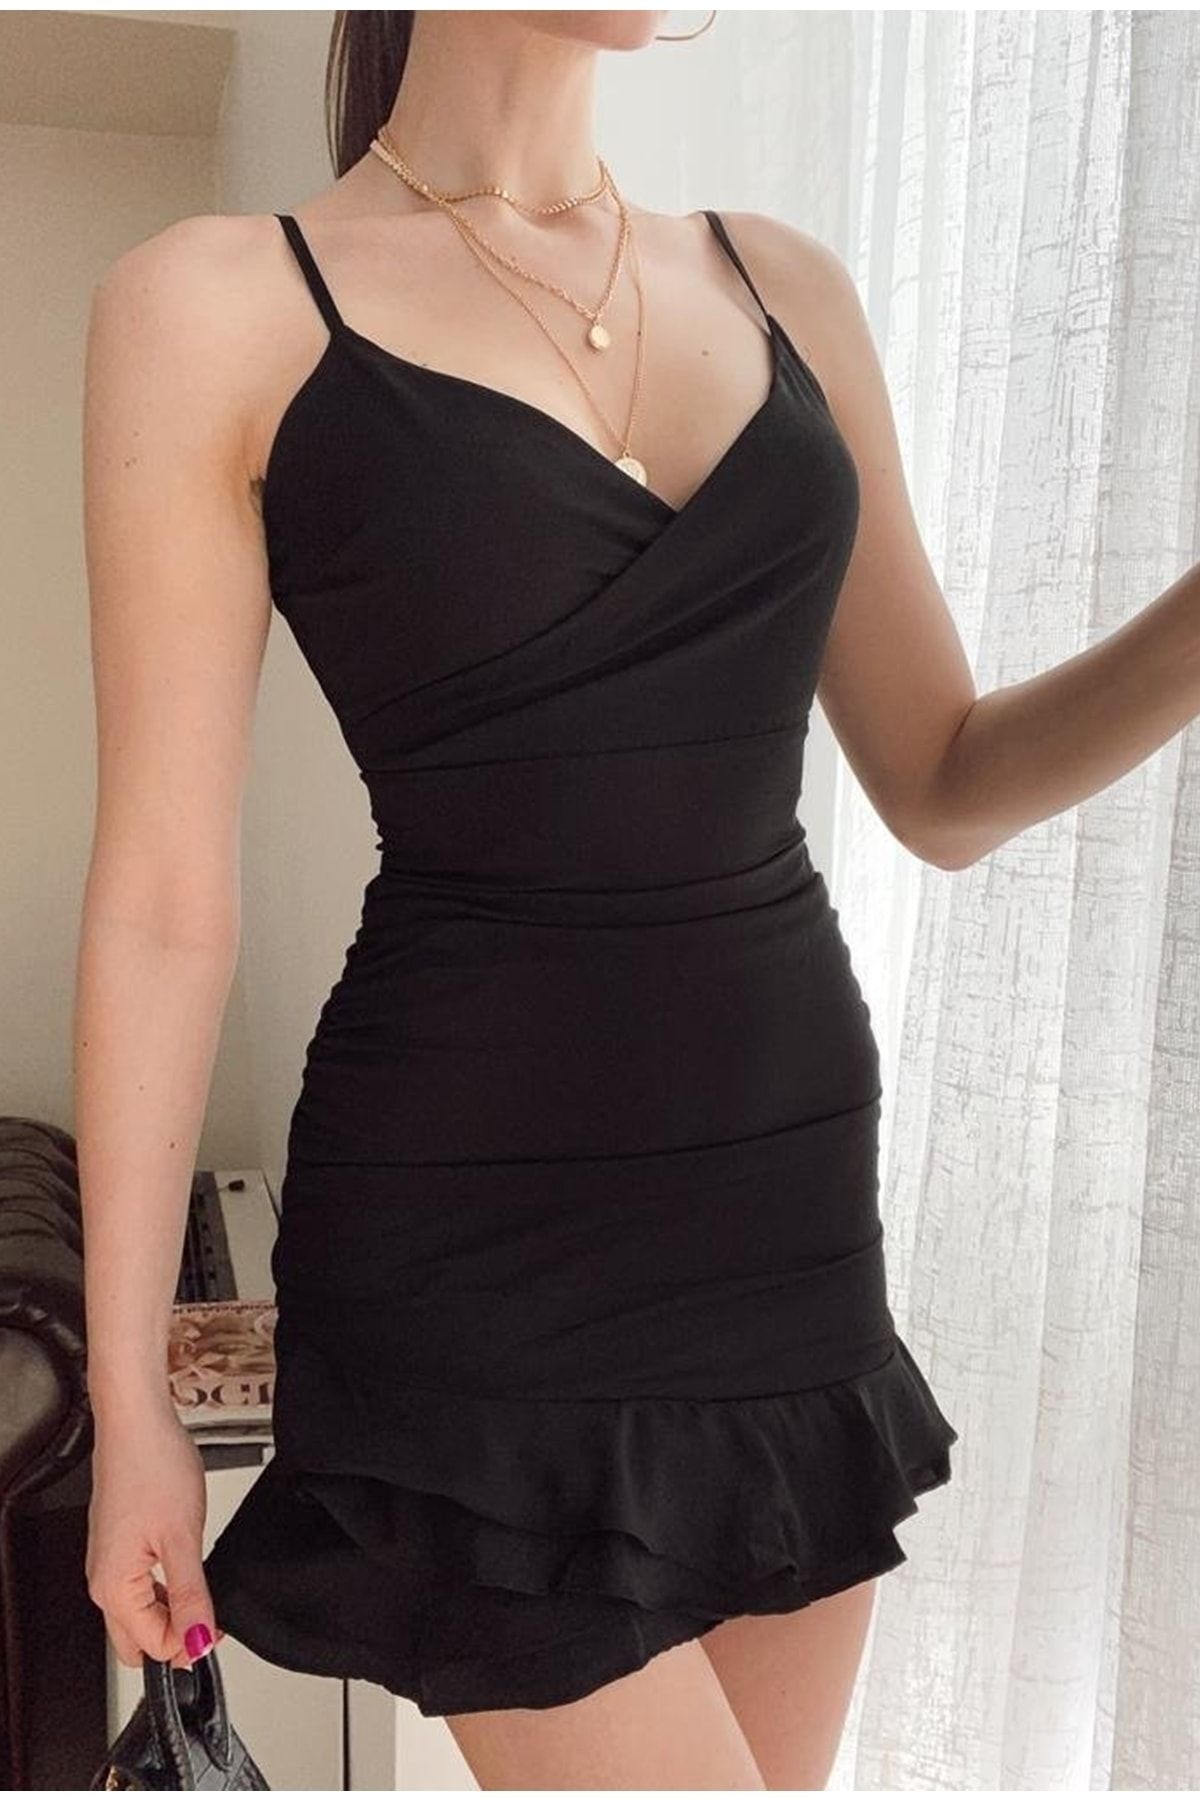 lovebox Ince Askılı Kruvaze Yaka Siyah Abiye Elbise Black Prom Dress Sd-005